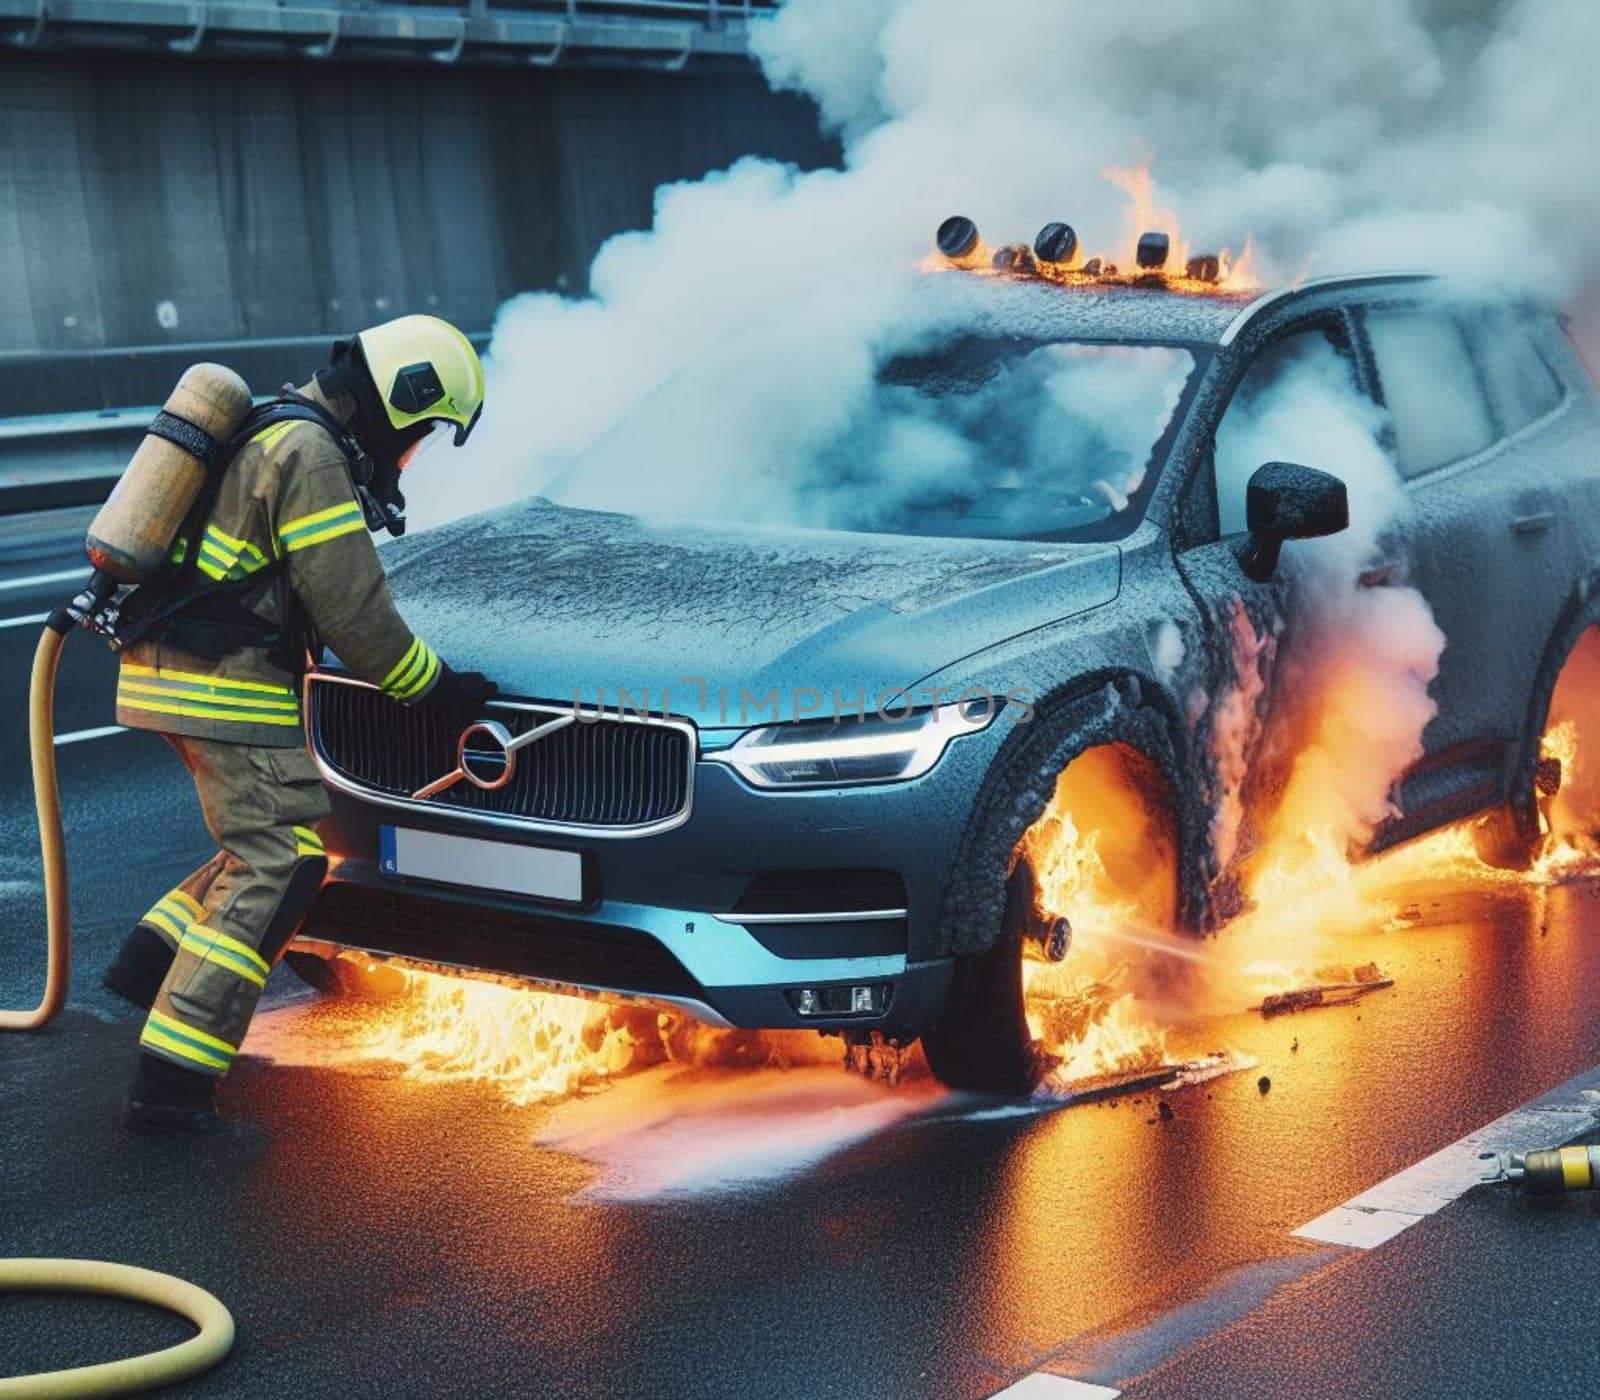 electric hybrid car suv burn bottom chasis, firefighter apply foam to extinguish flames big smoke by verbano